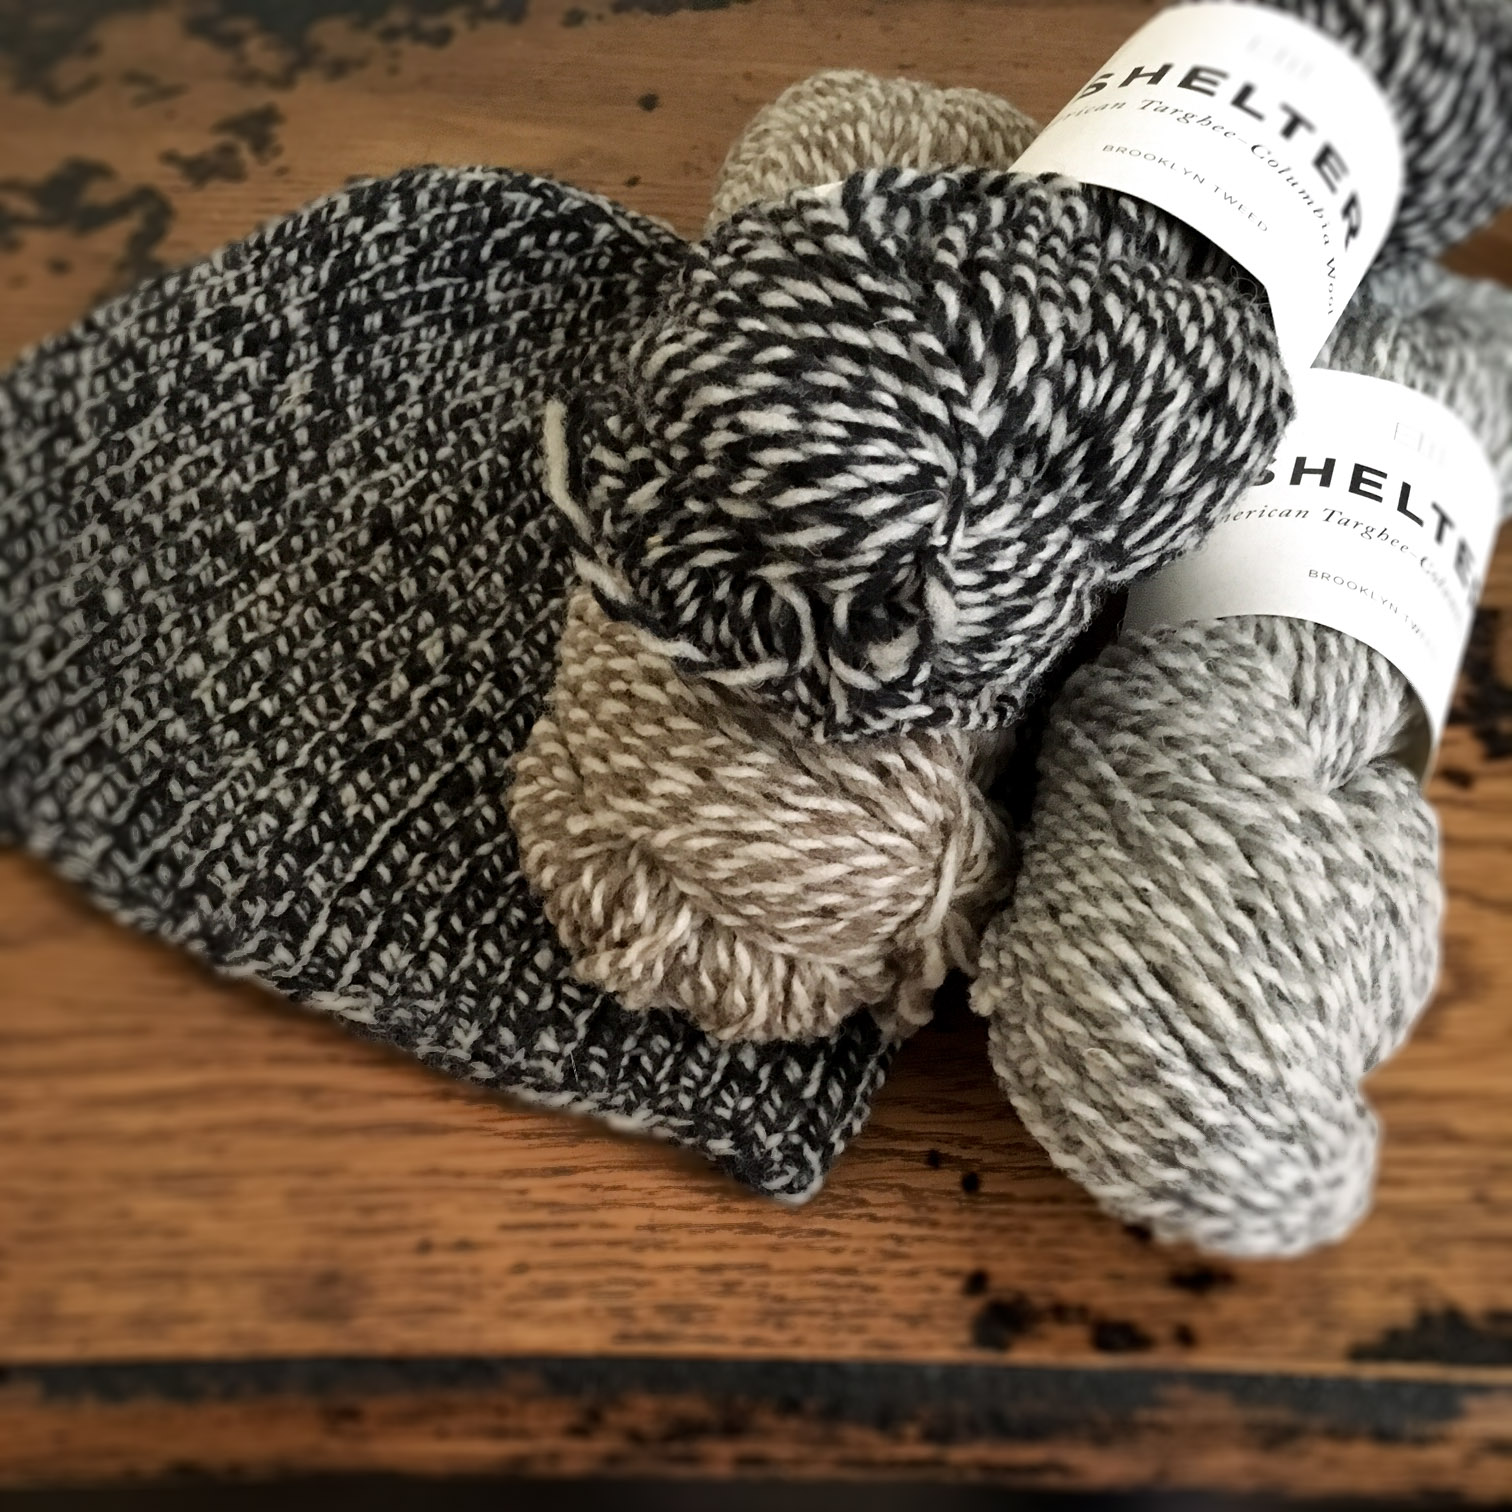 Introducing: Shelter Marls by Brooklyn Tweed